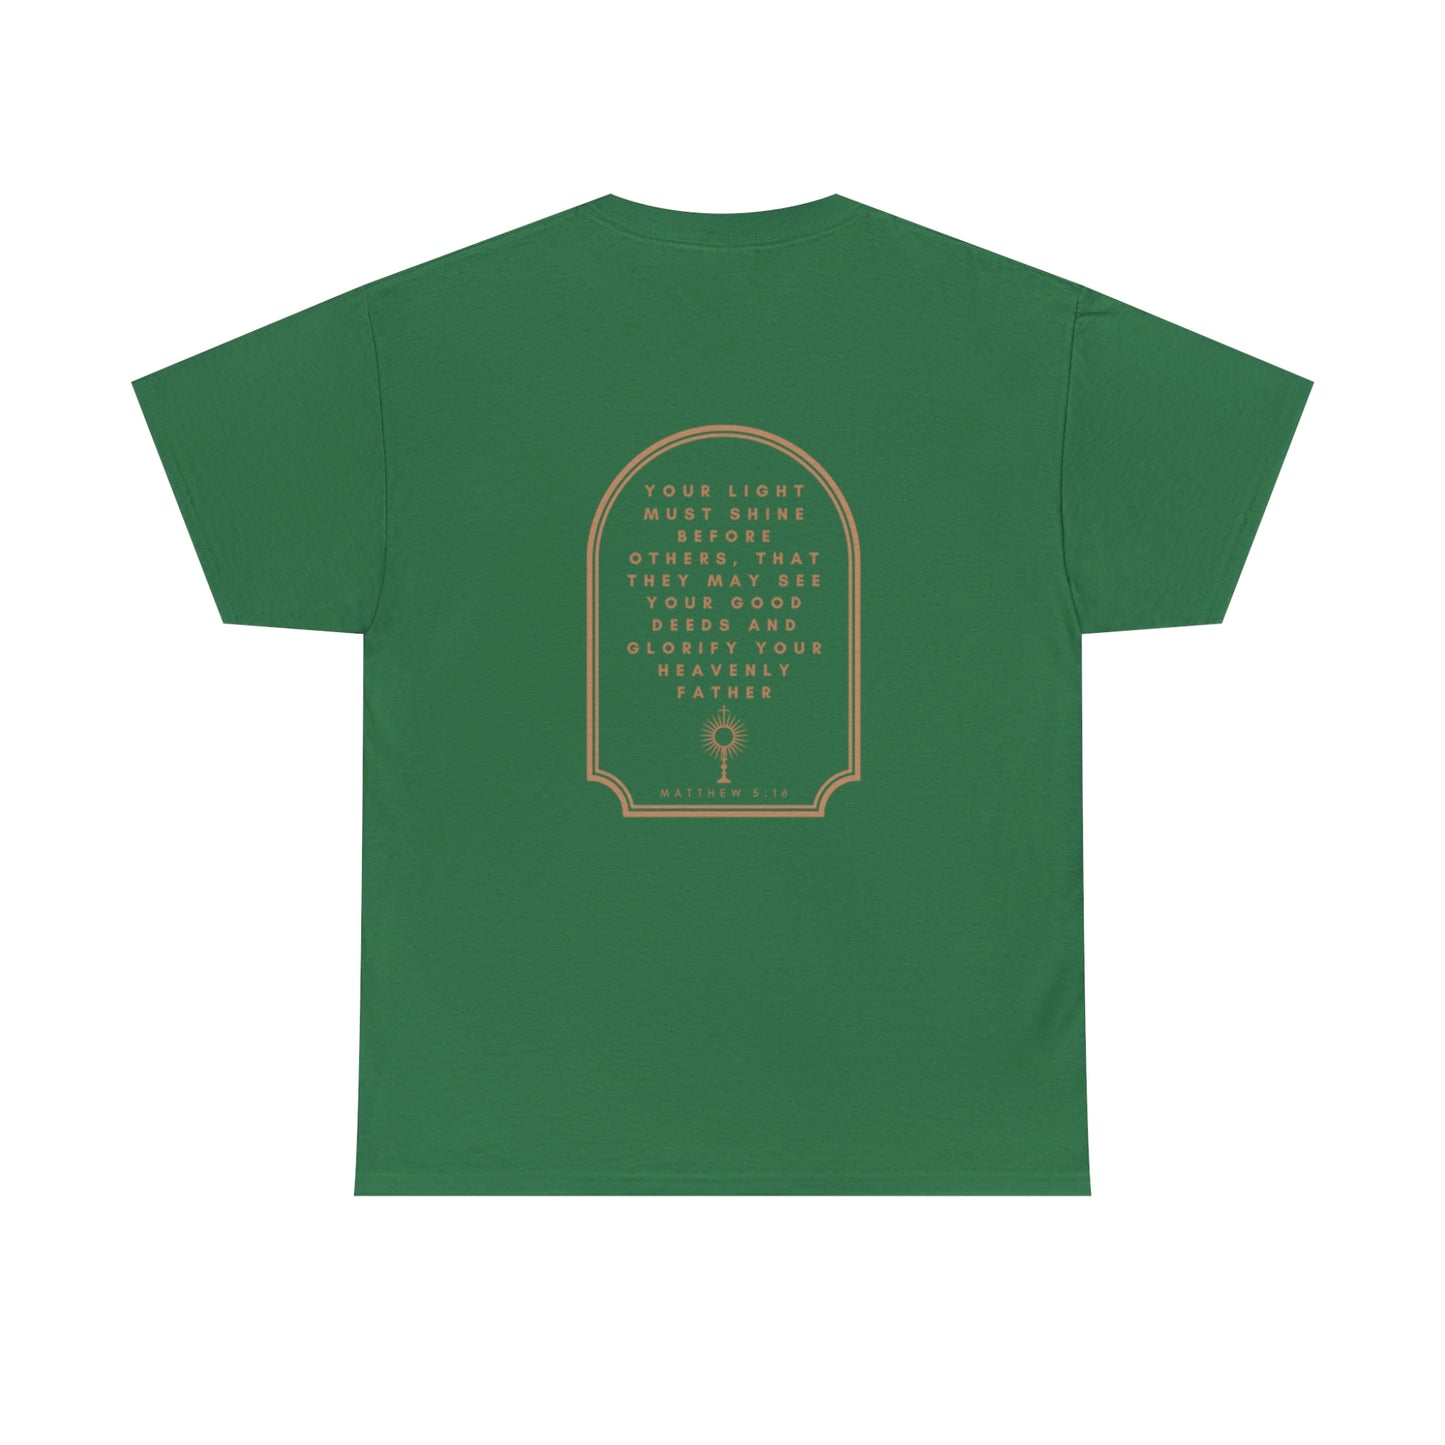 Parish Picnic 200th Anniversary Shirt - 2023